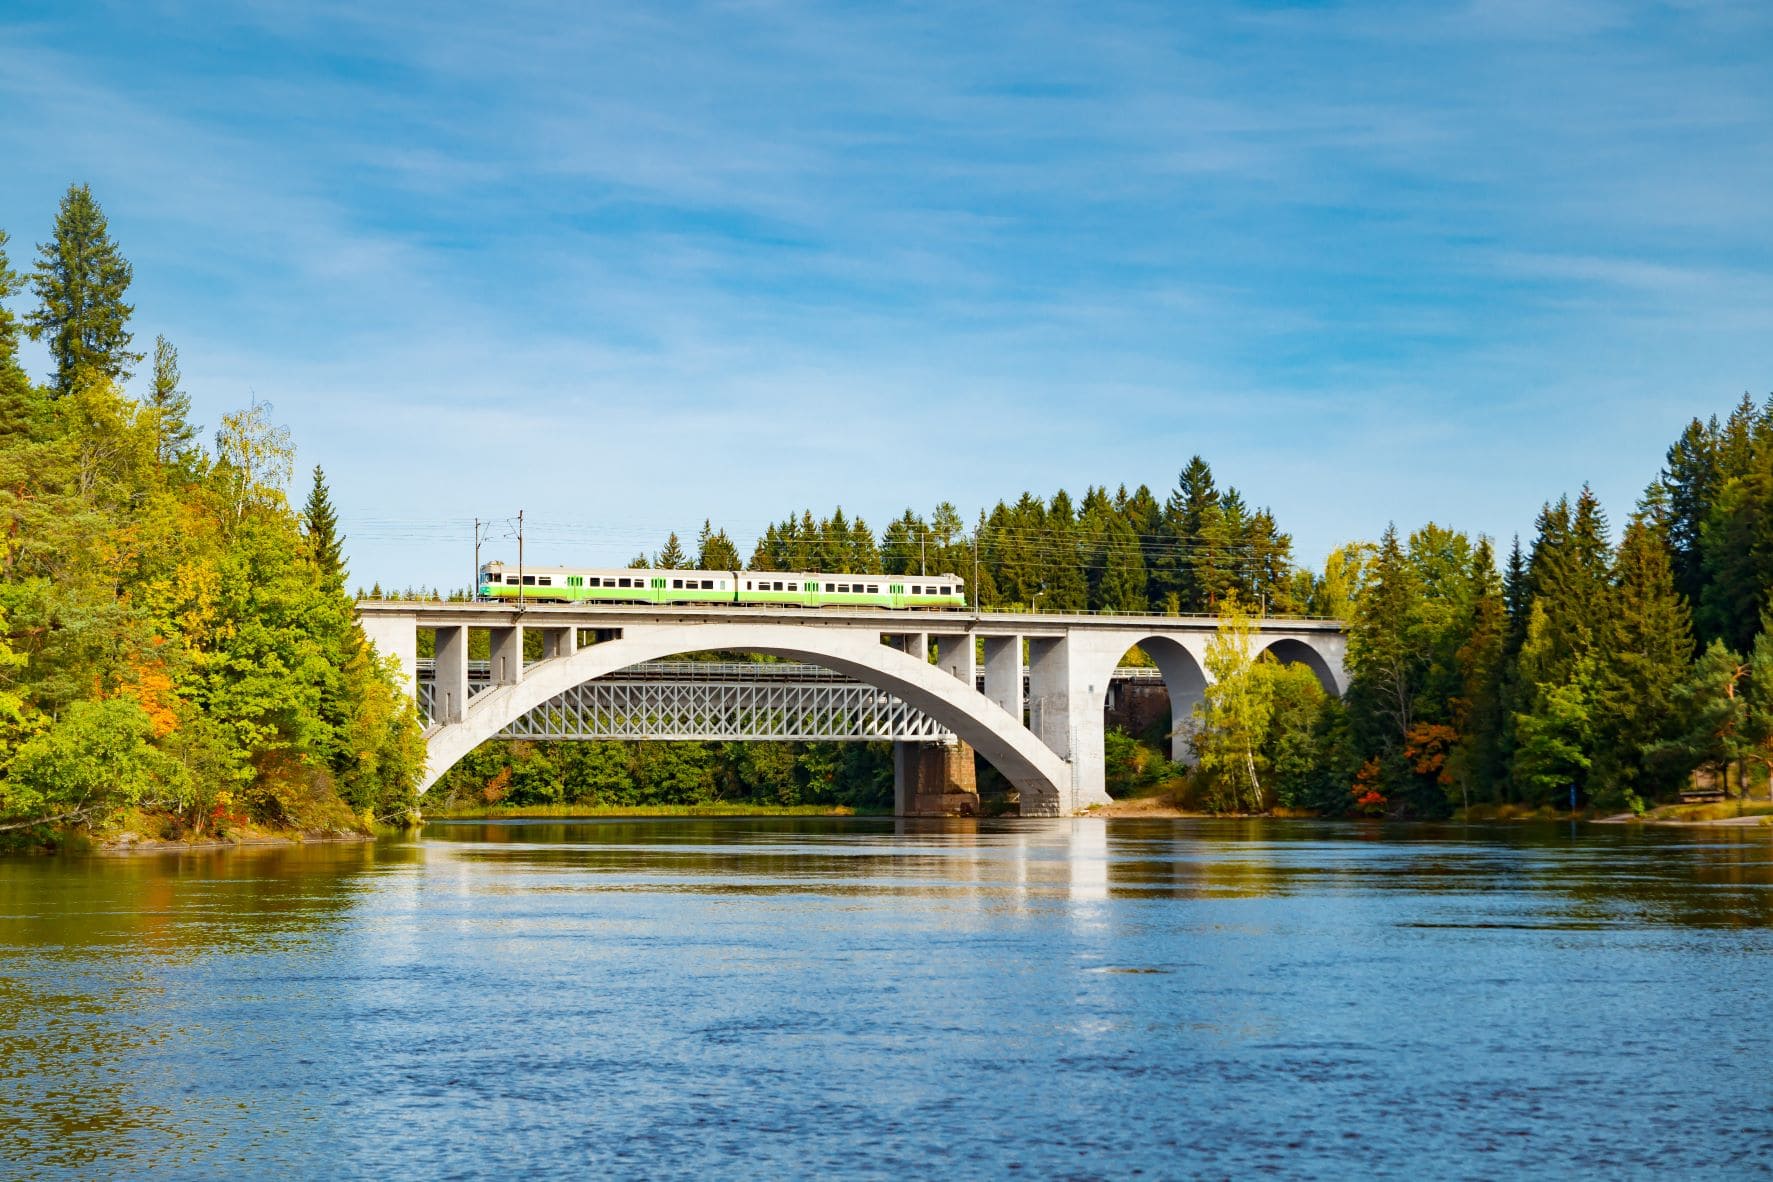 Zug in Finnland überquert Brücke